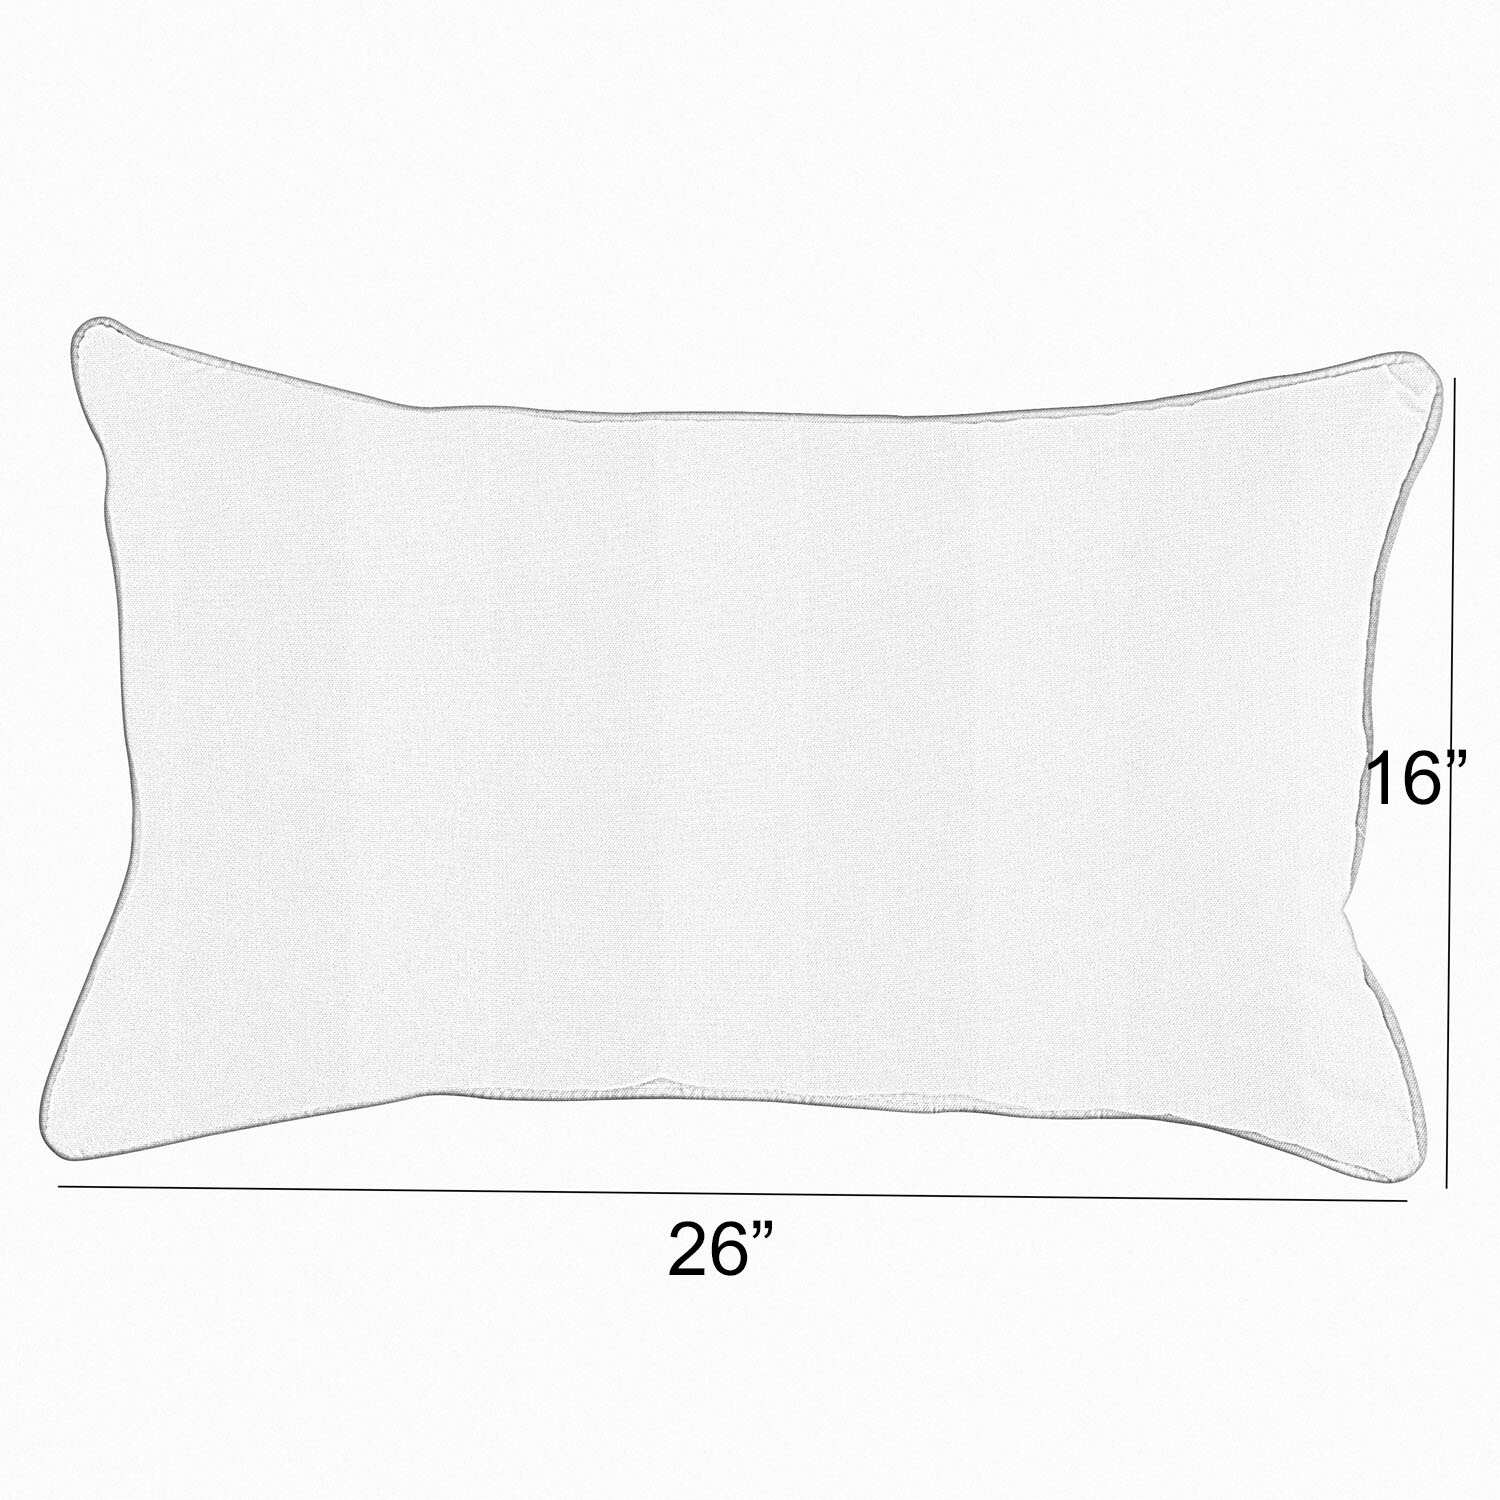 Humble + Haute Black Buffalo Plaid Indoor/ Outdoor XL Lumbar Pillow - 16 in h x 26 in w